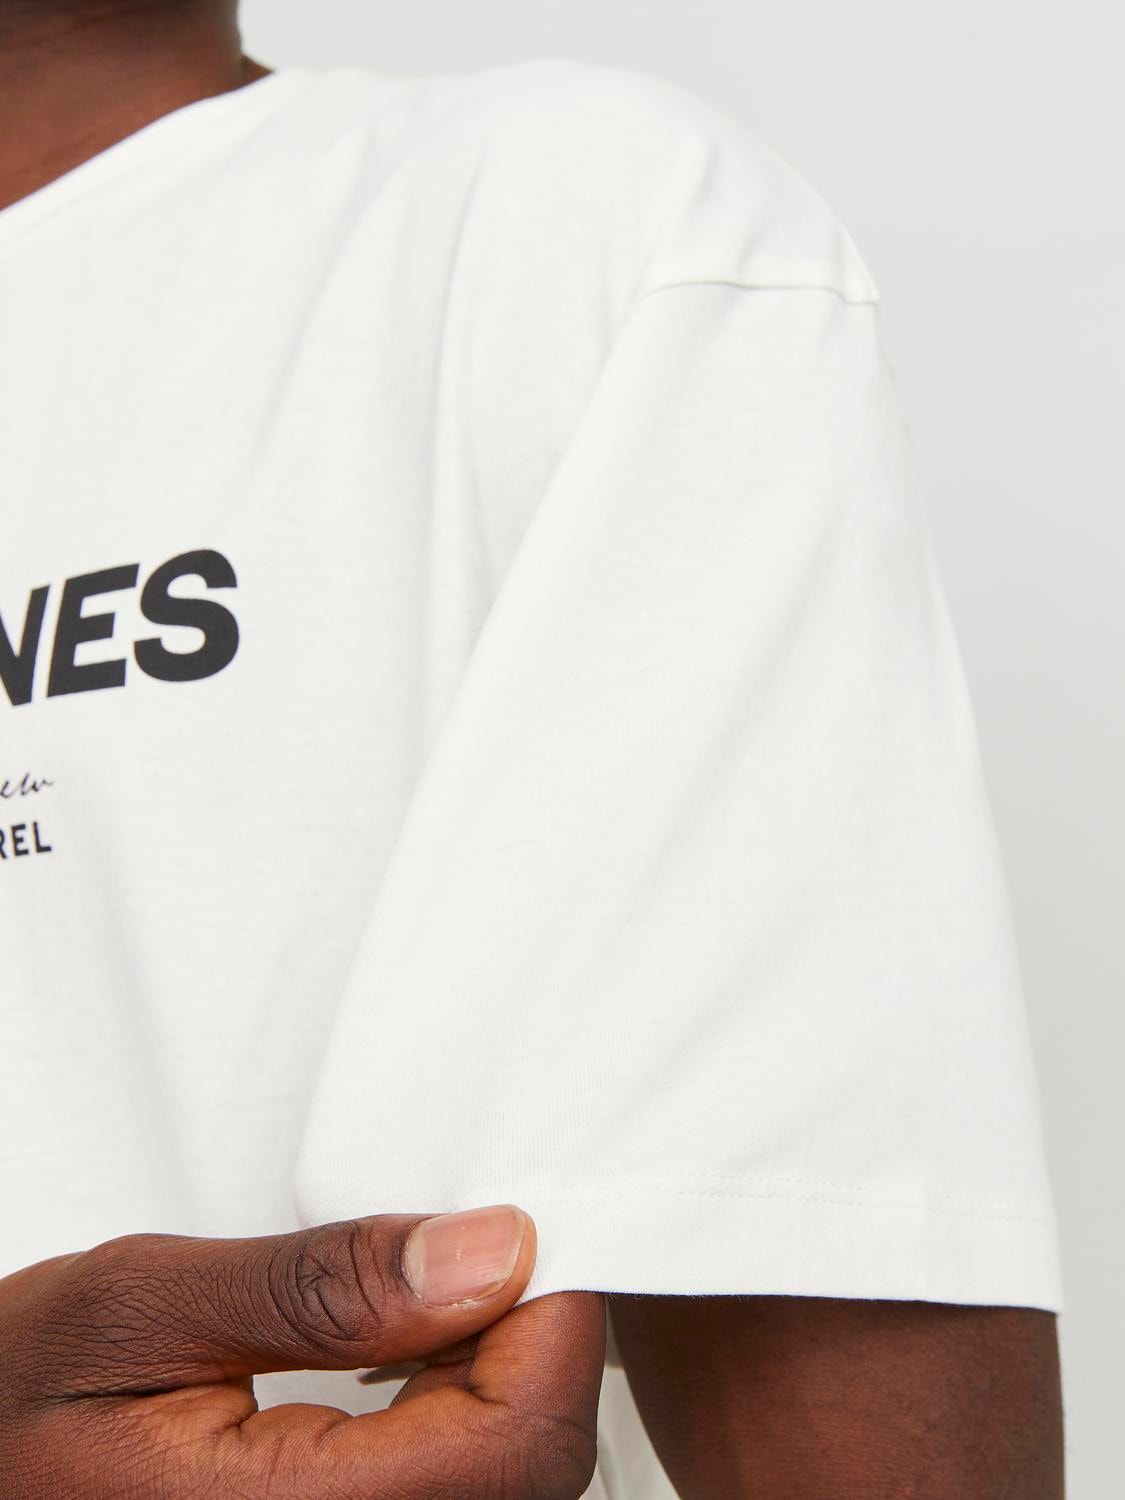 Jack & Jones Logo Rundhals T-shirt -Cloud Dancer - 12247782